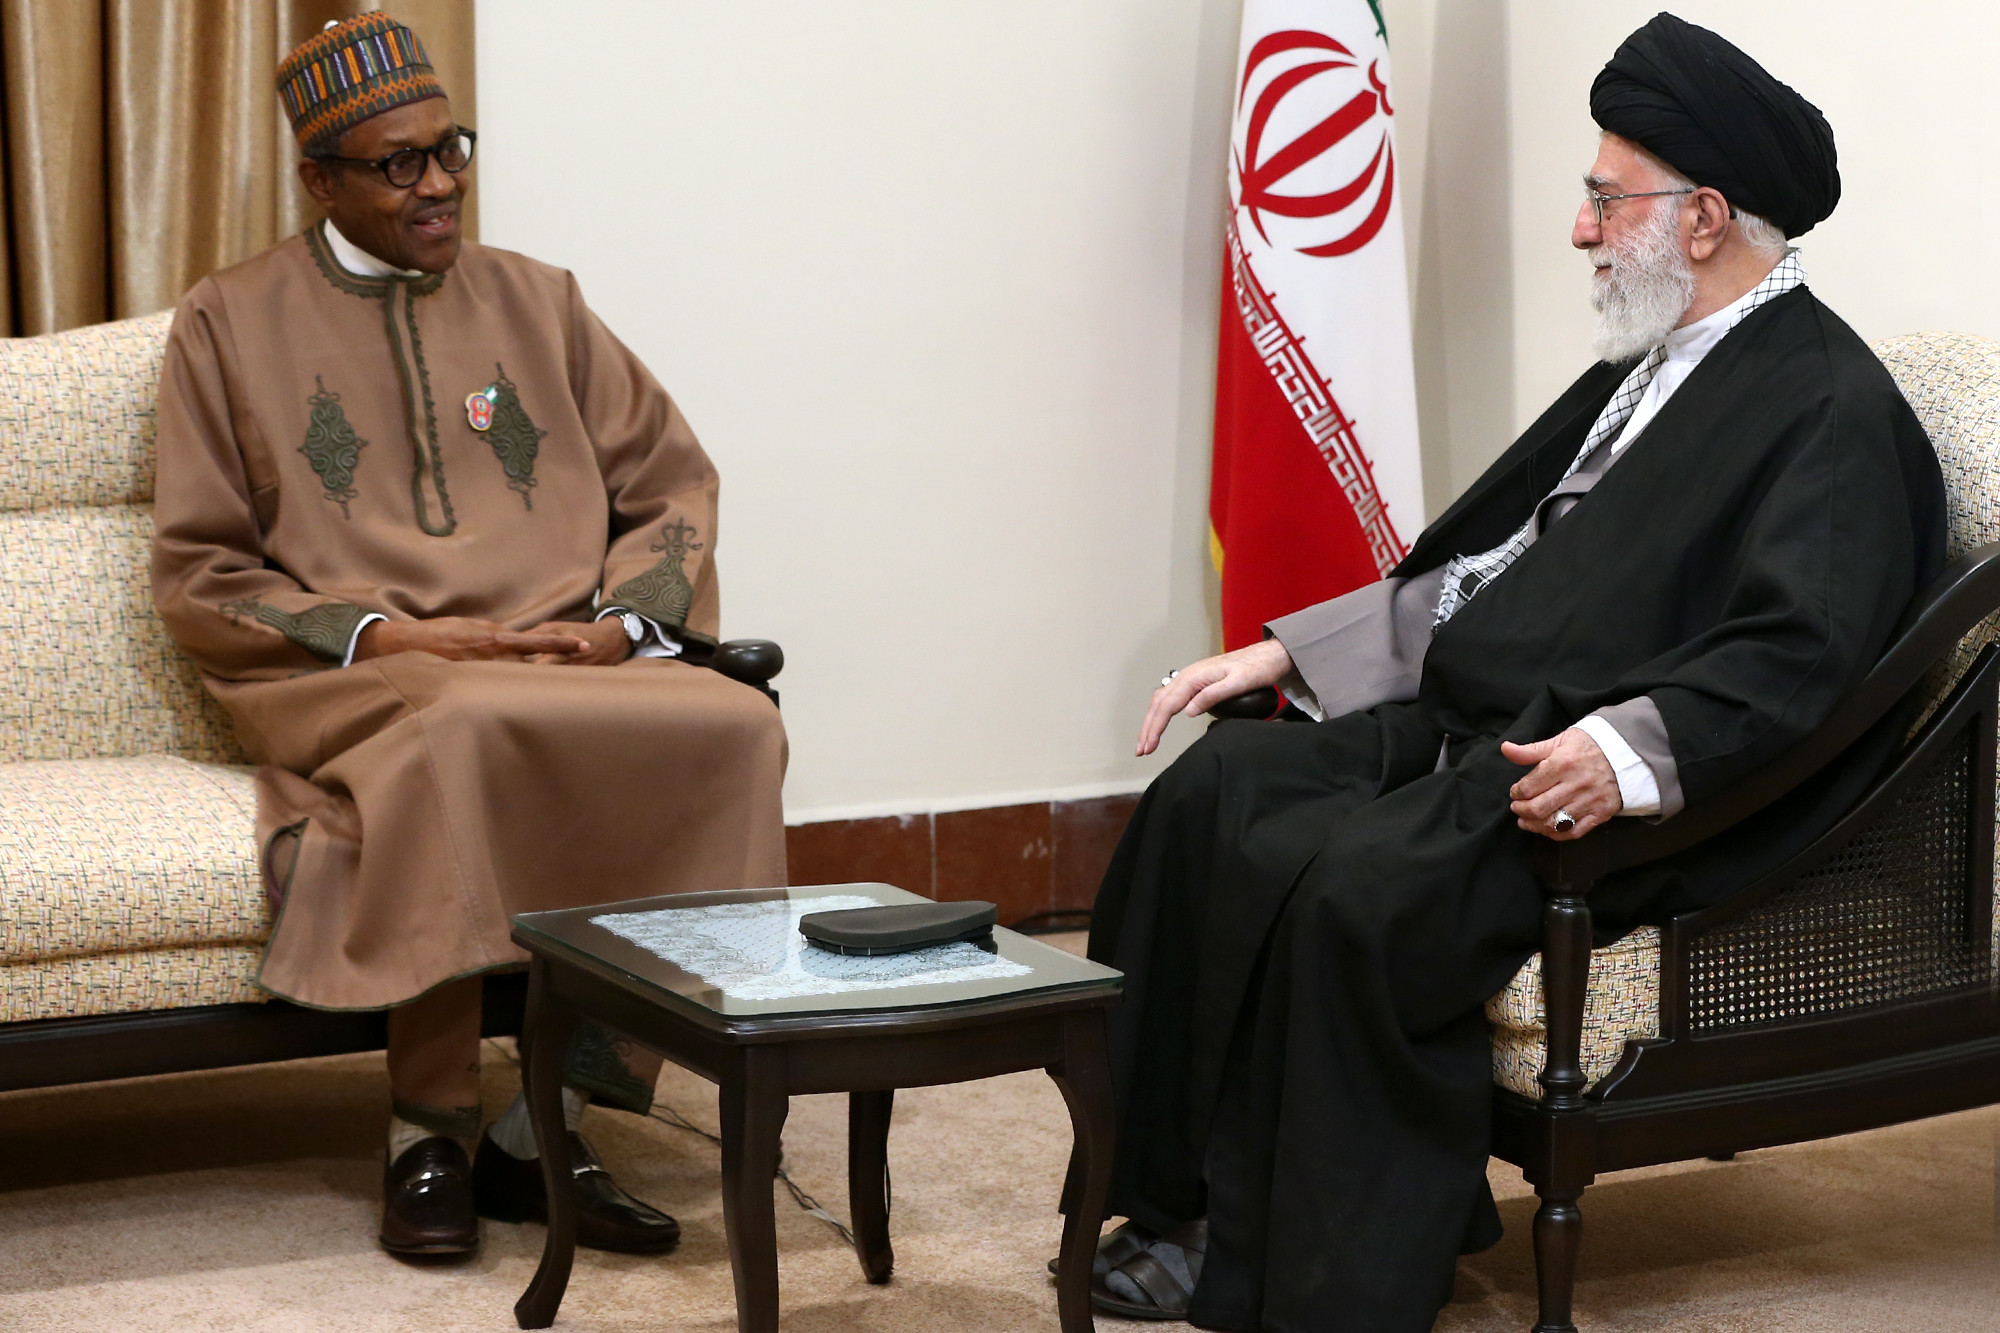 Nigerian President Muhammad Buhari 0n, November 23, 2015 met with the Islamic Revolution Leader Ayatollah Khamenei in Tehran, Iran.